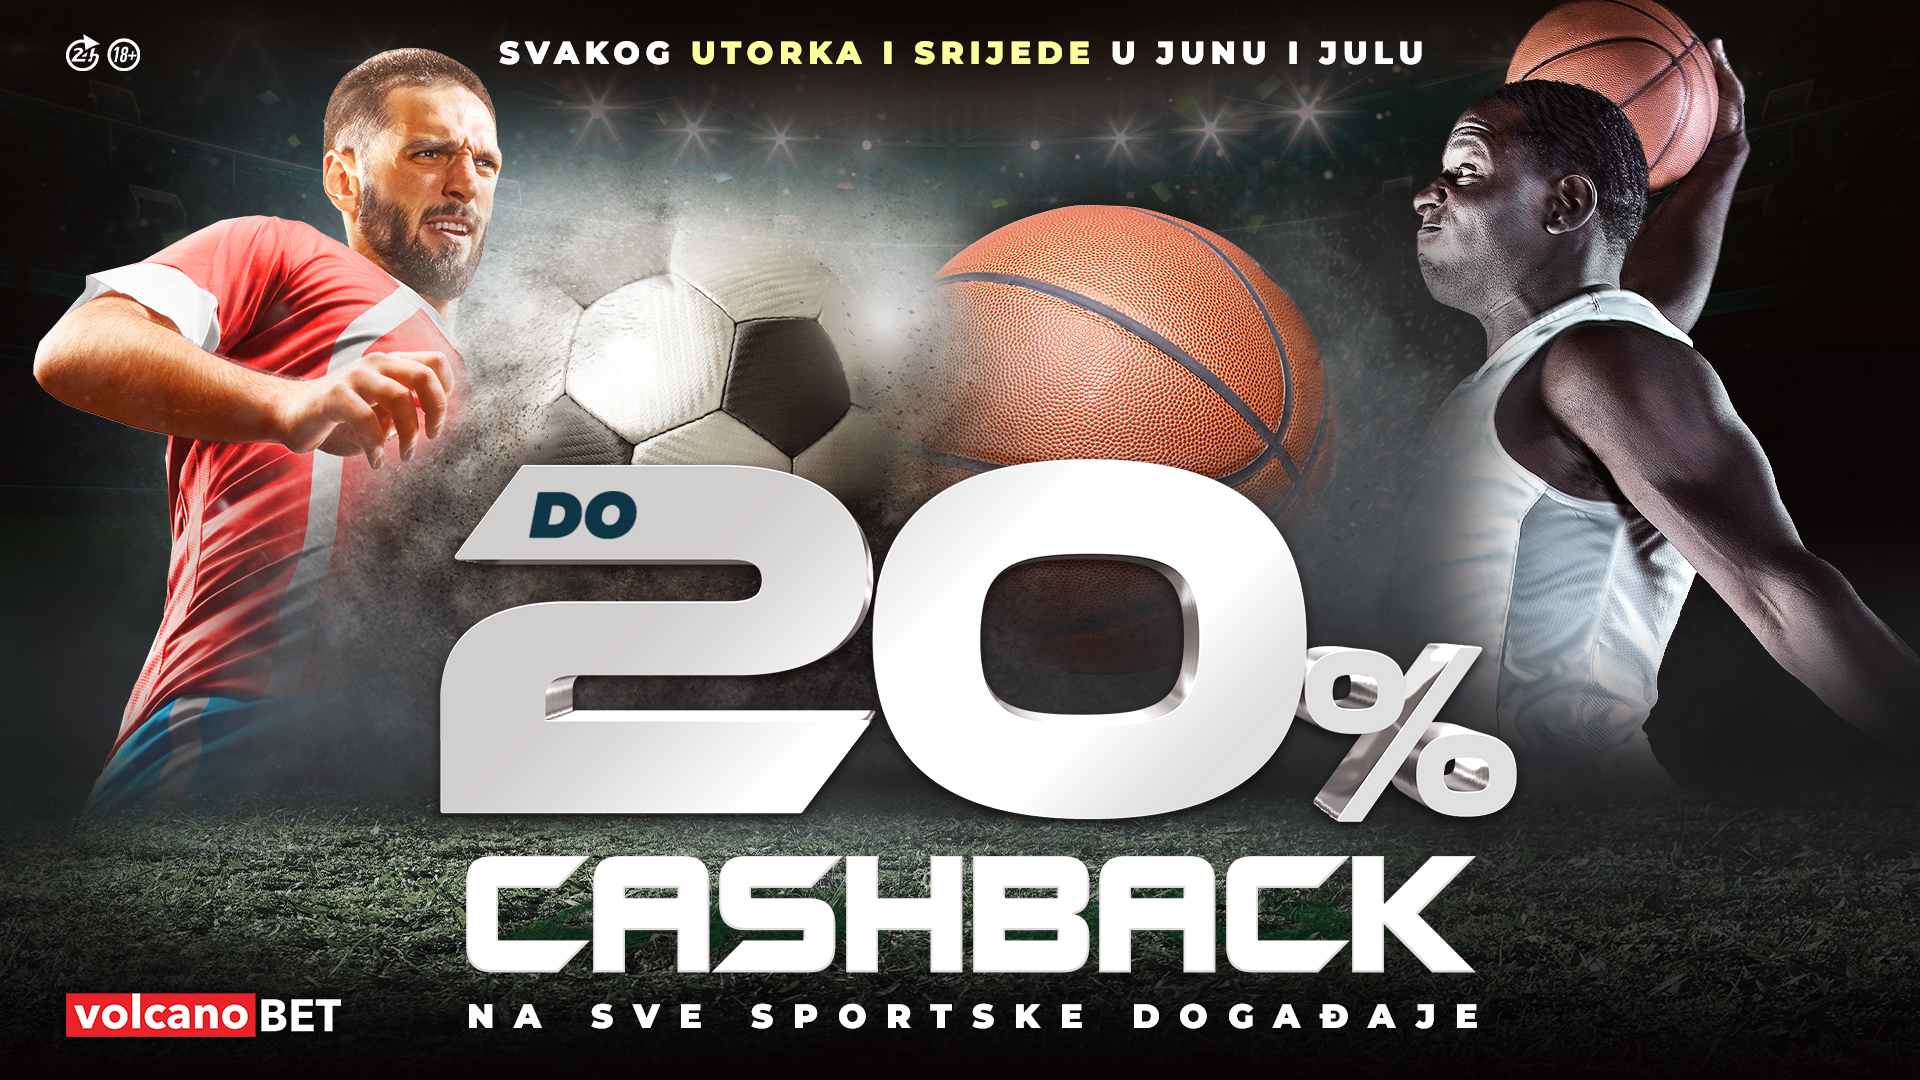 Sport CashBack Jun